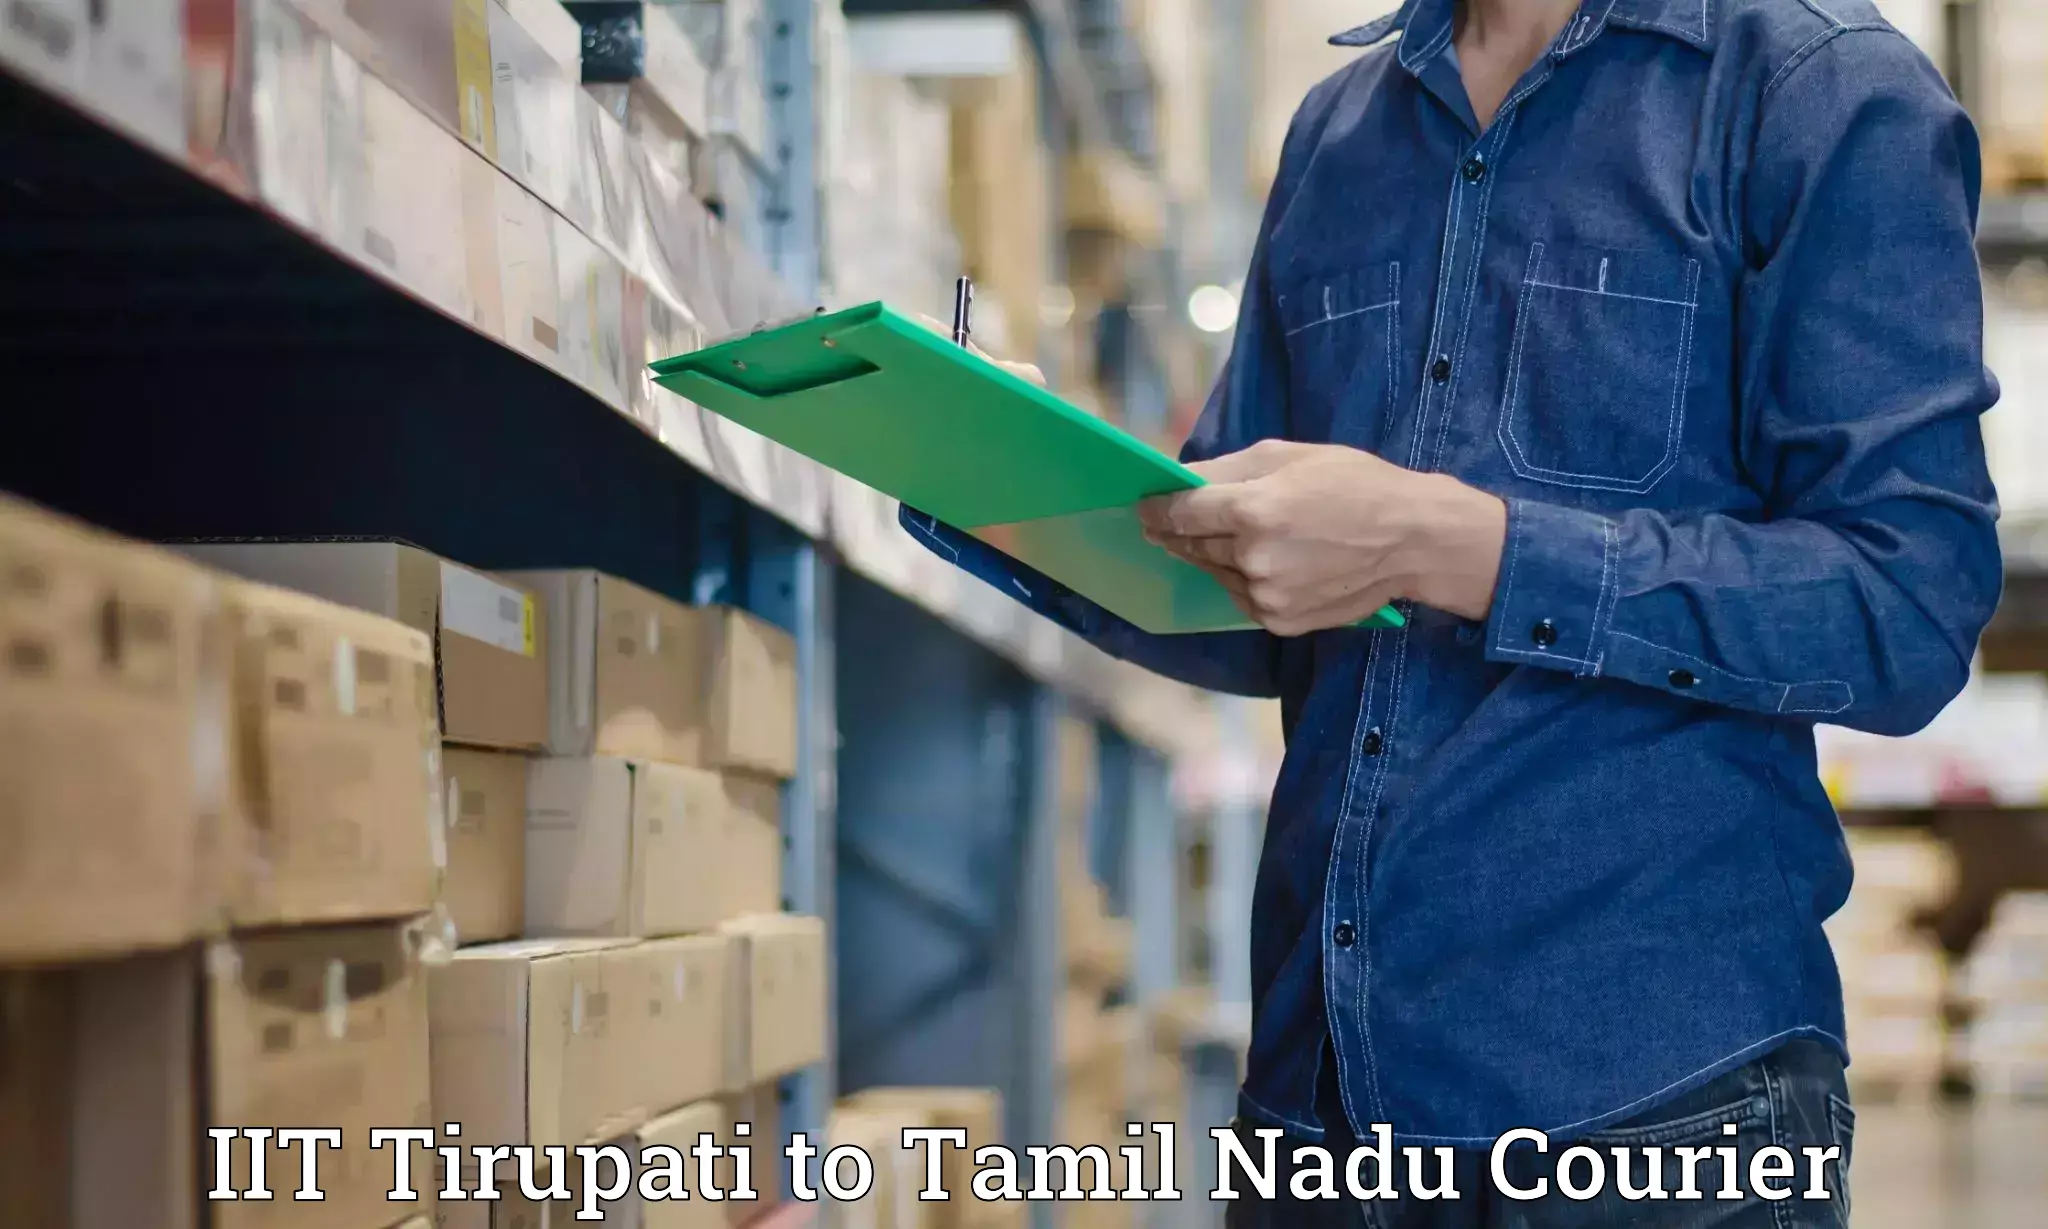 Digital courier platforms IIT Tirupati to Tirukalukundram